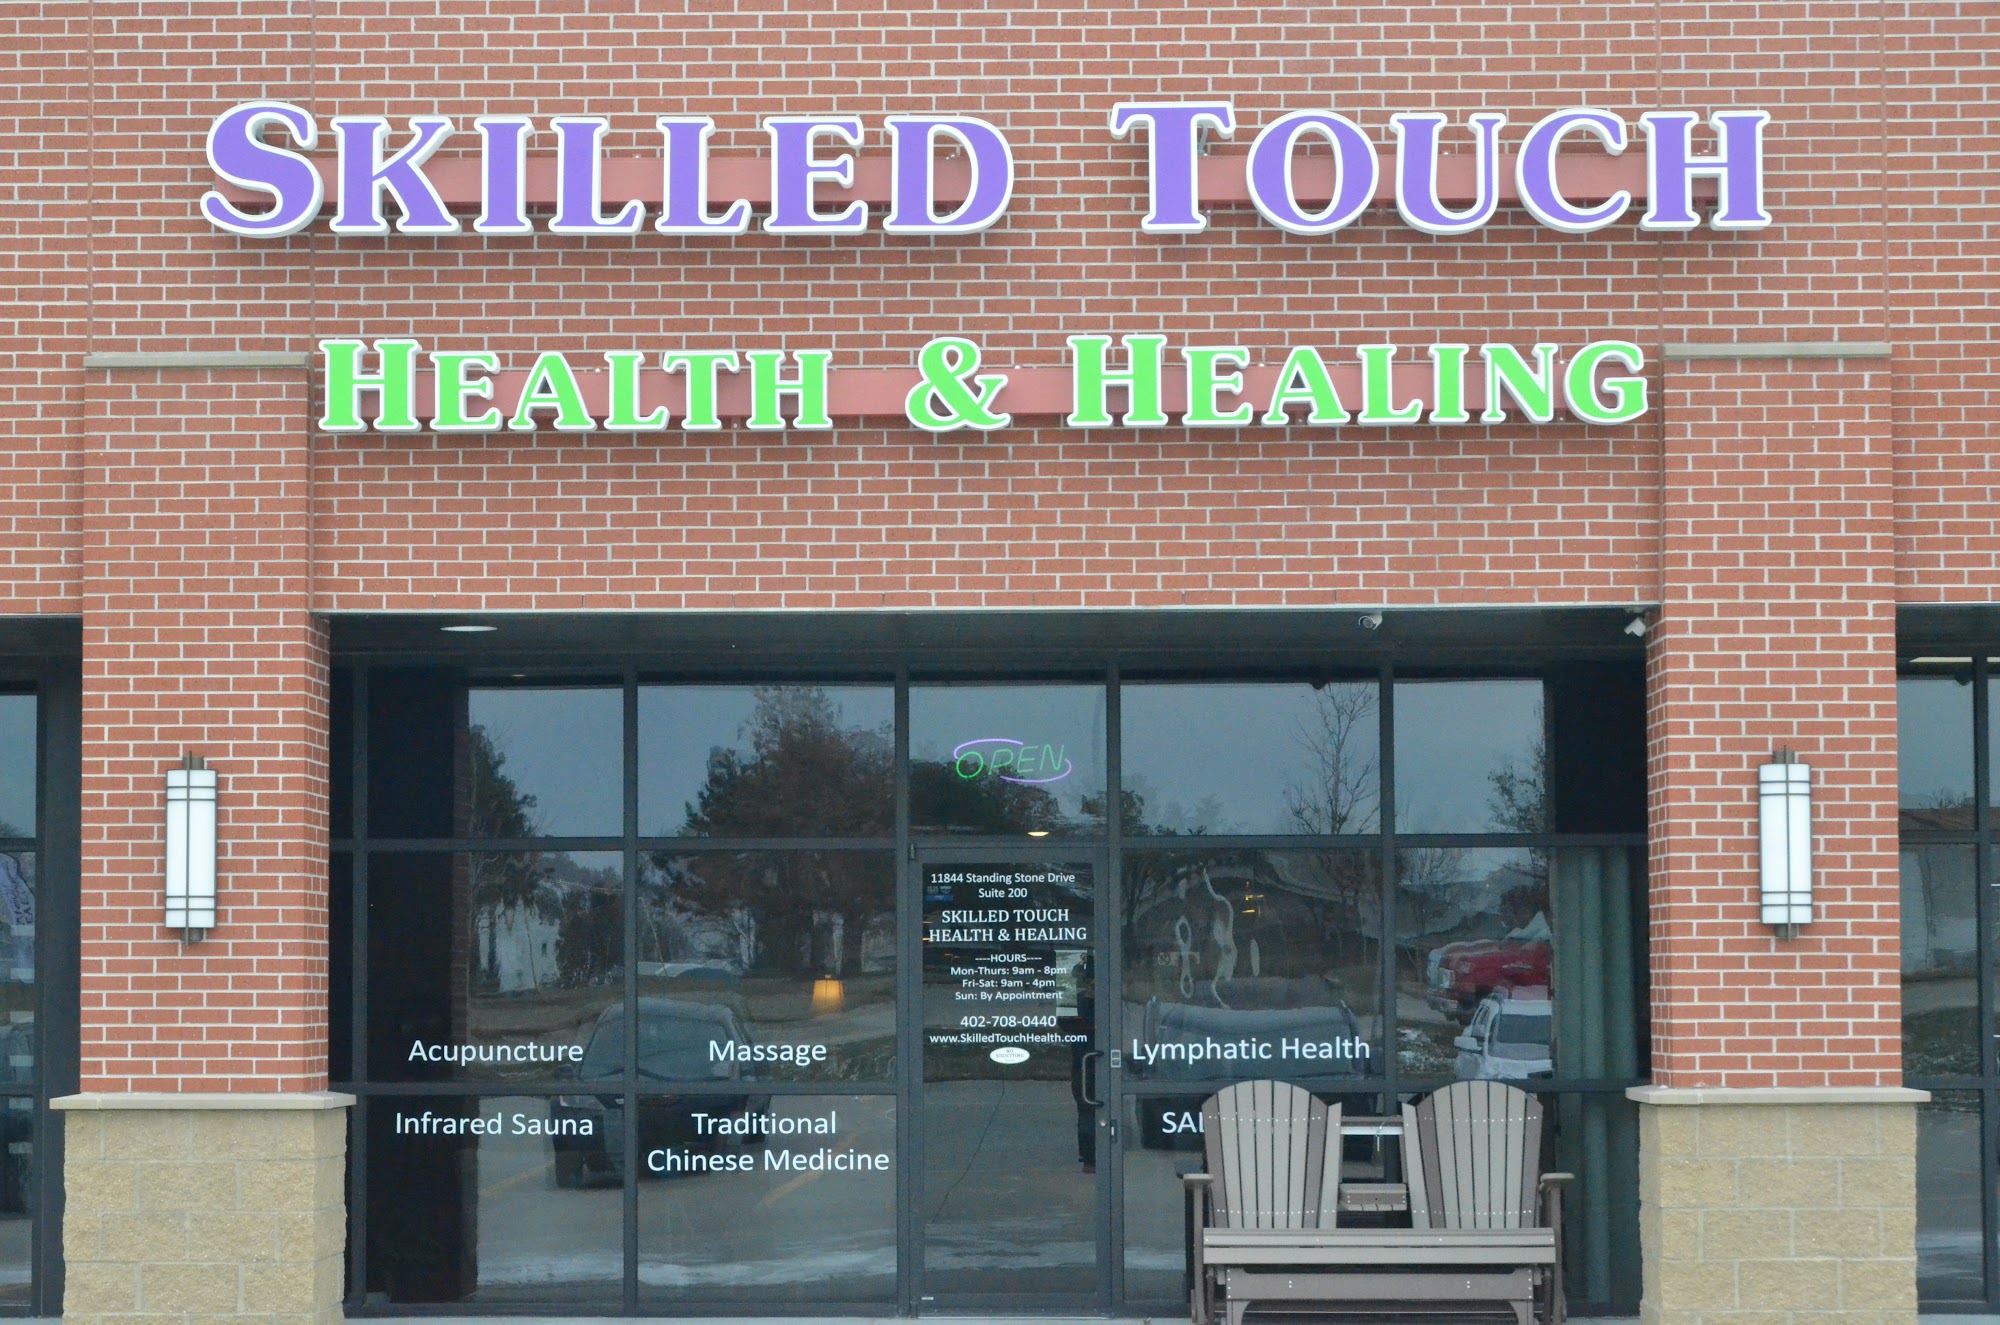 Skilled Touch Health & Healing 11844 Standing Stone Dr Suite 200, Gretna Nebraska 68028